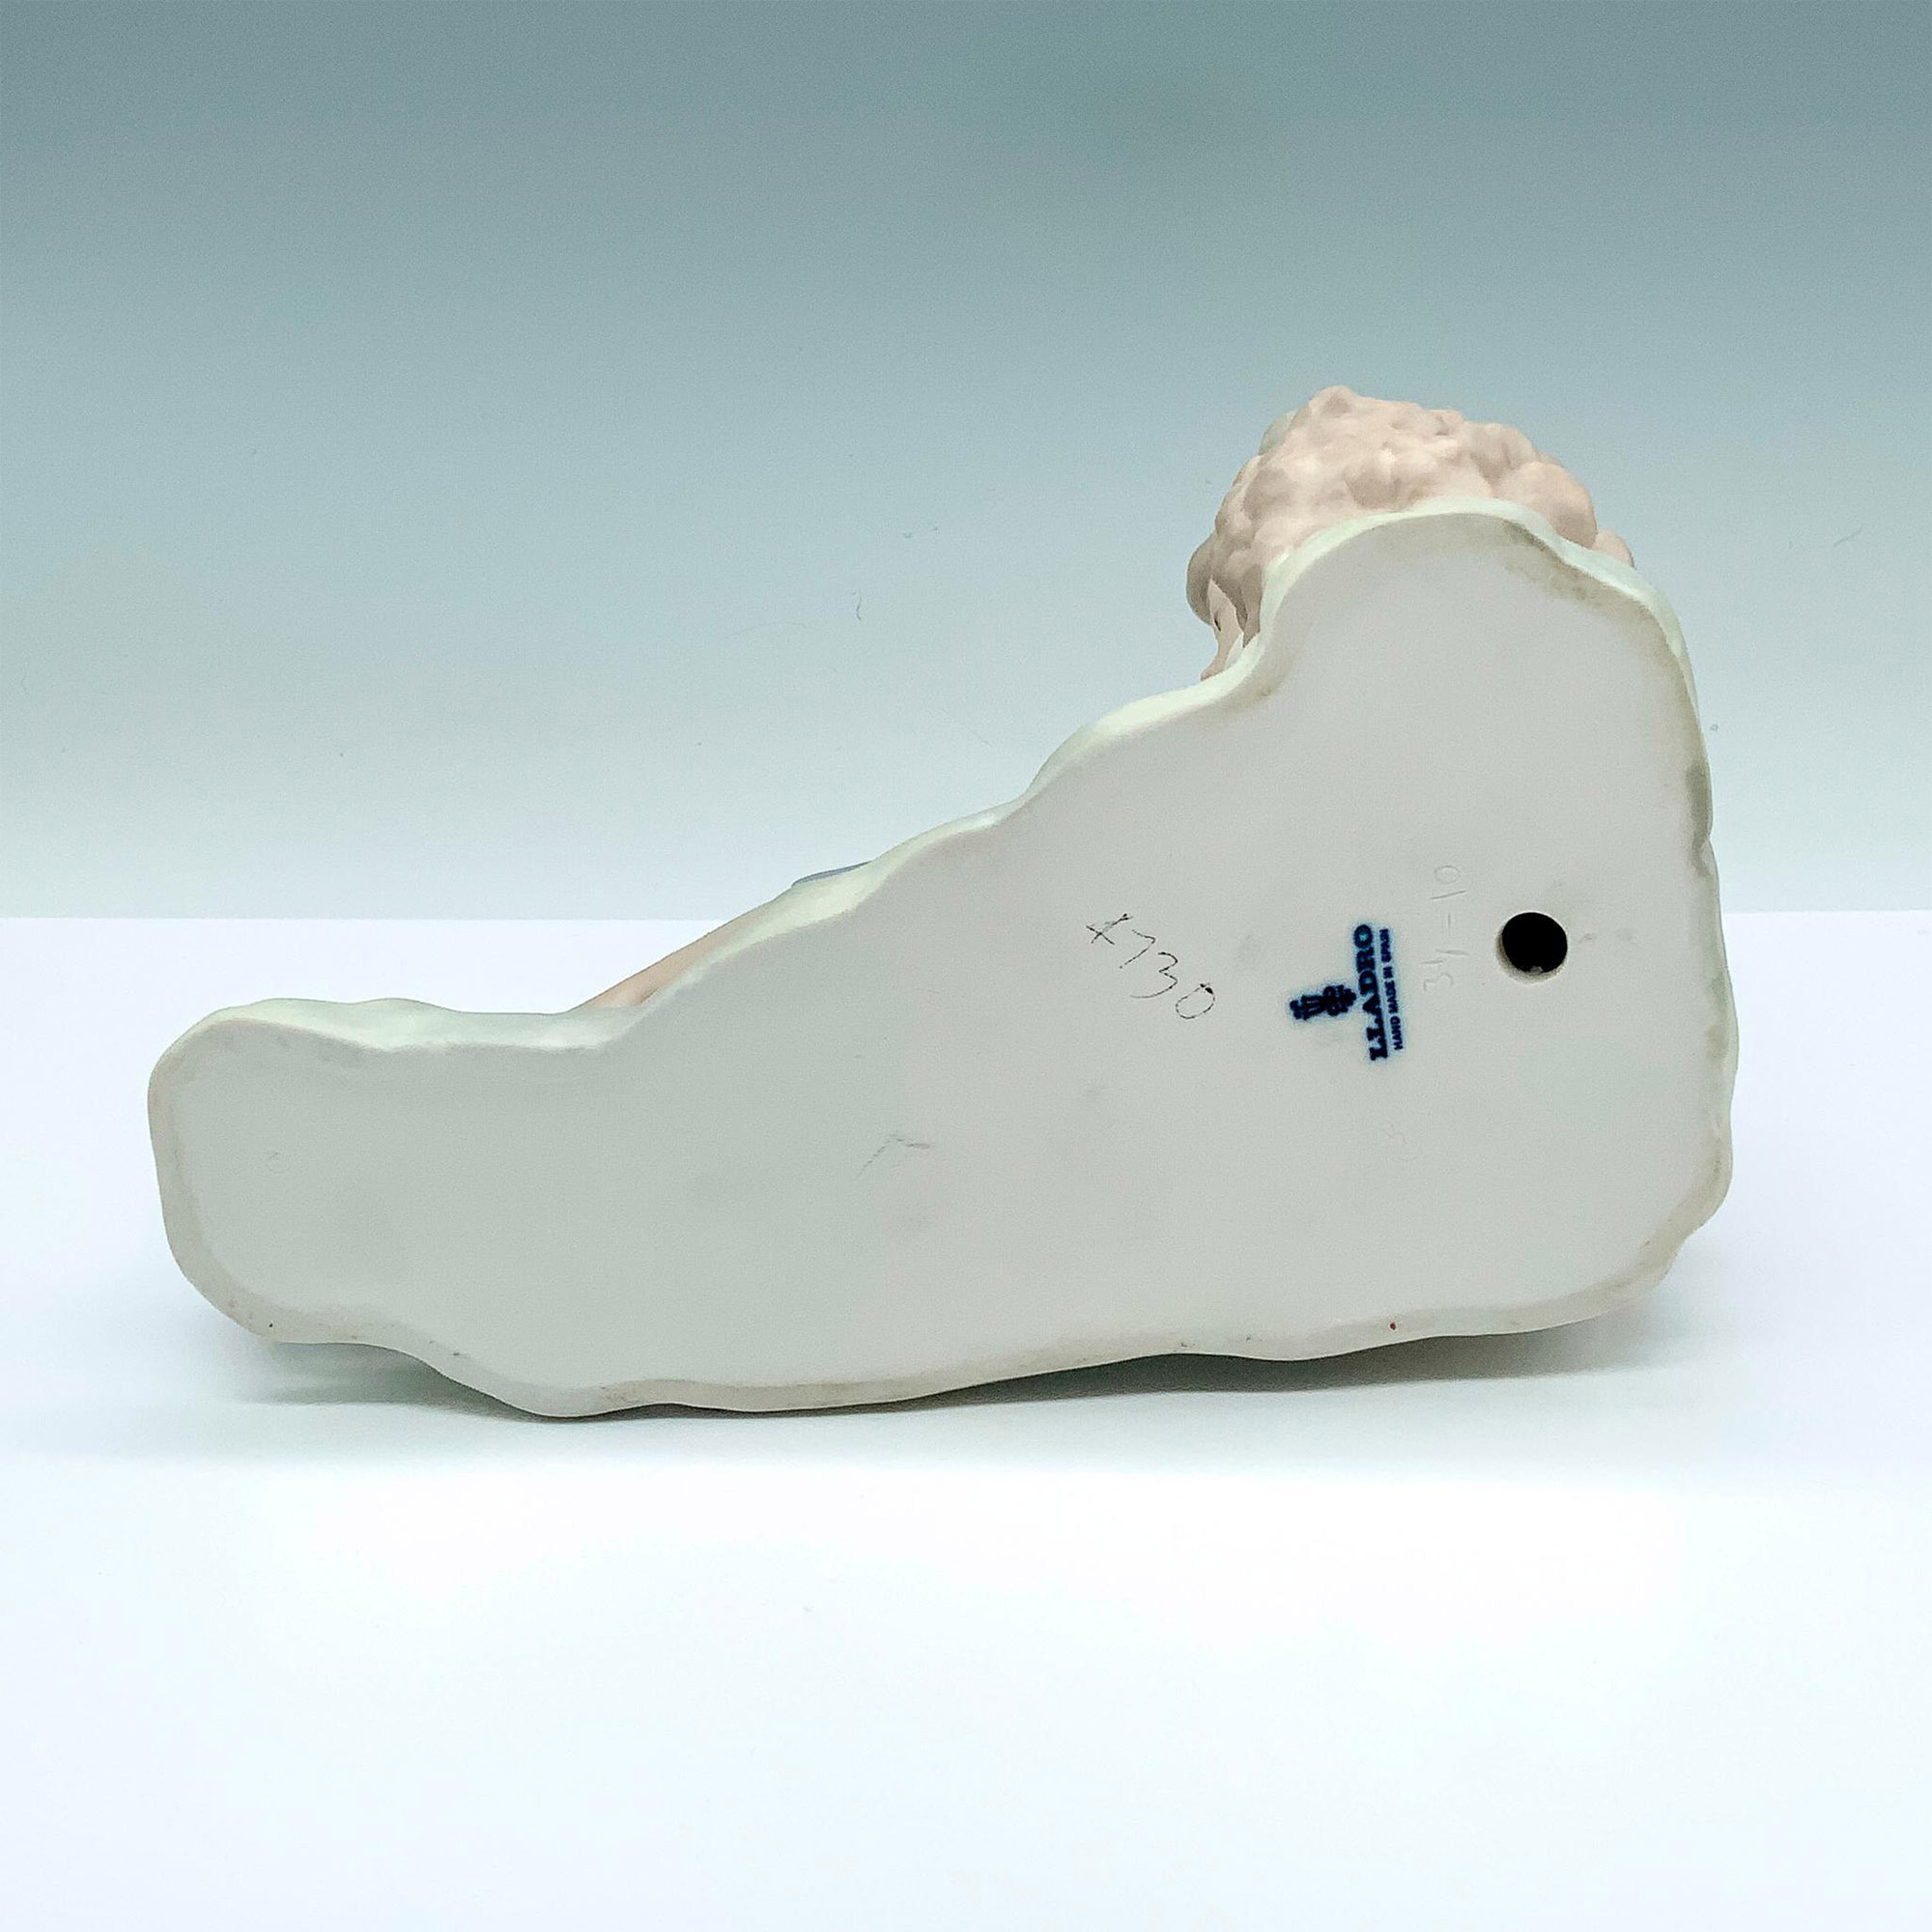 Shepherd W/bird 1014730 - Lladro Porcelain Figurine - Image 5 of 5